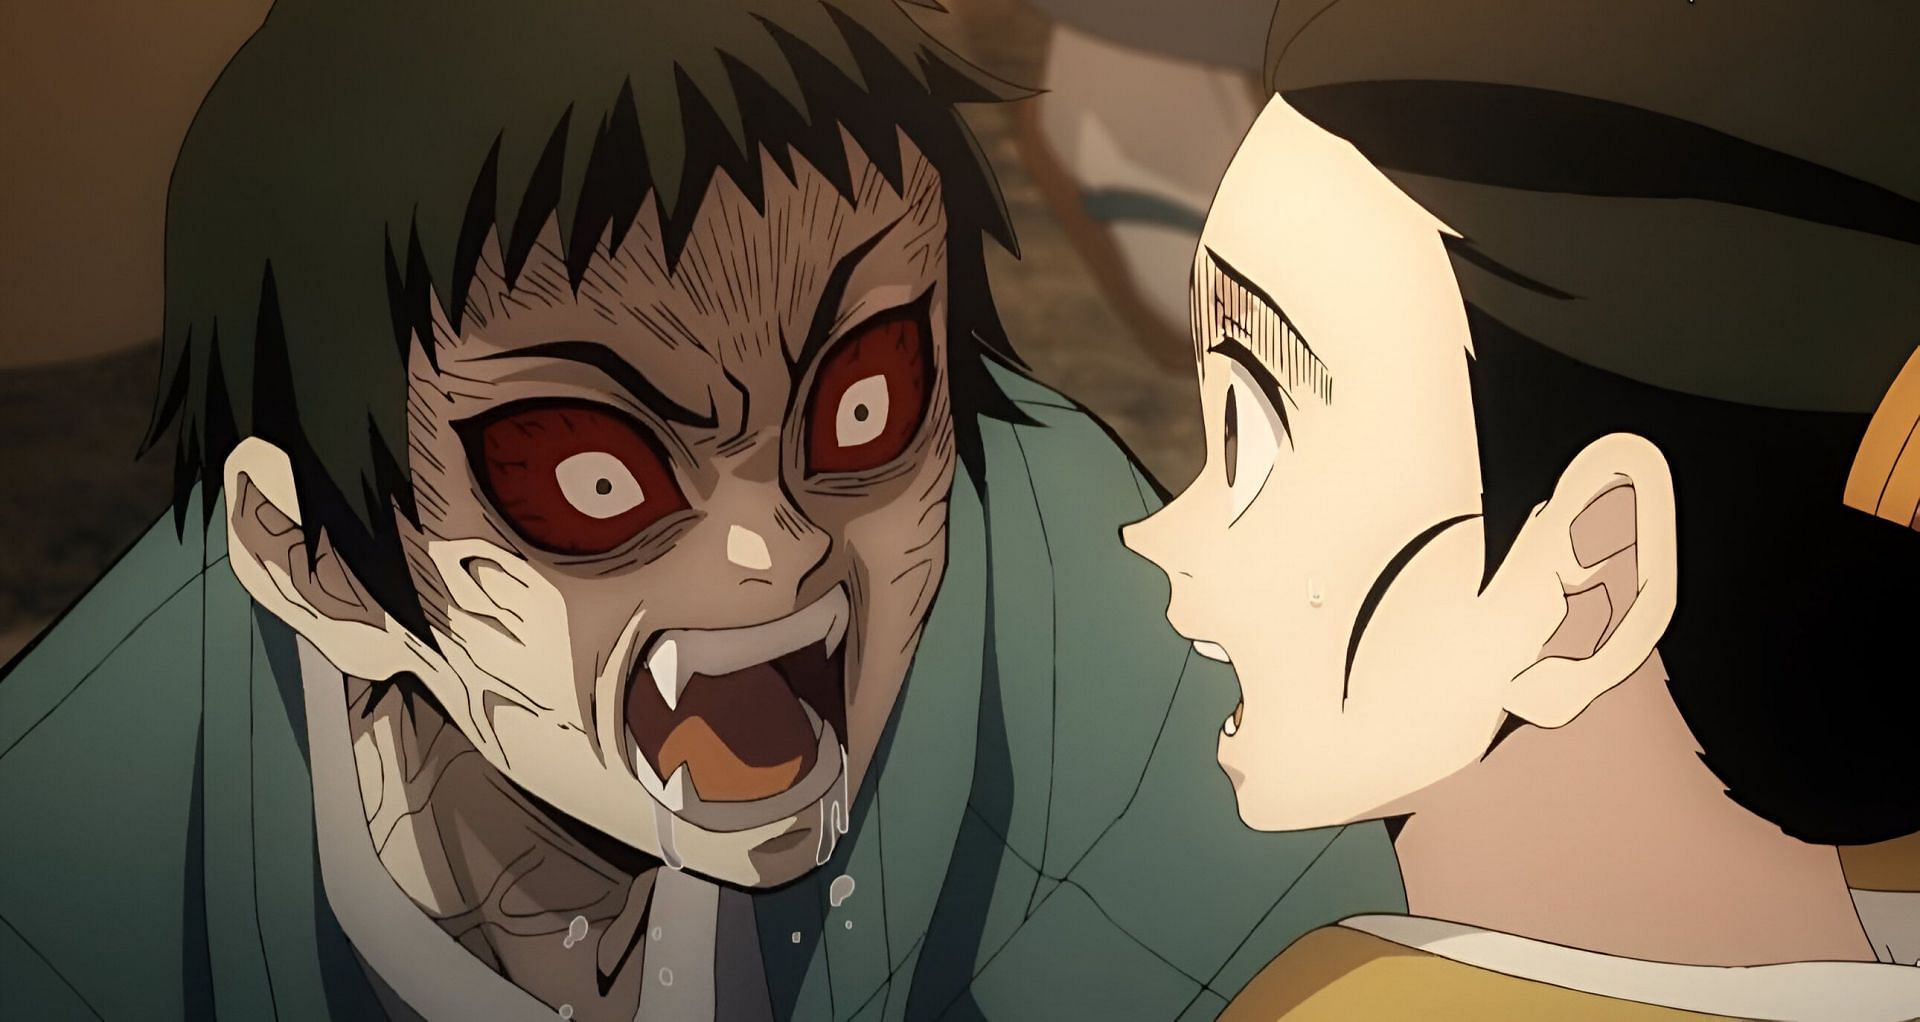 The man from Asakusa whose Blood Demon Art wounded Muzan in season 4 episode 8 (Image via Ufotable)